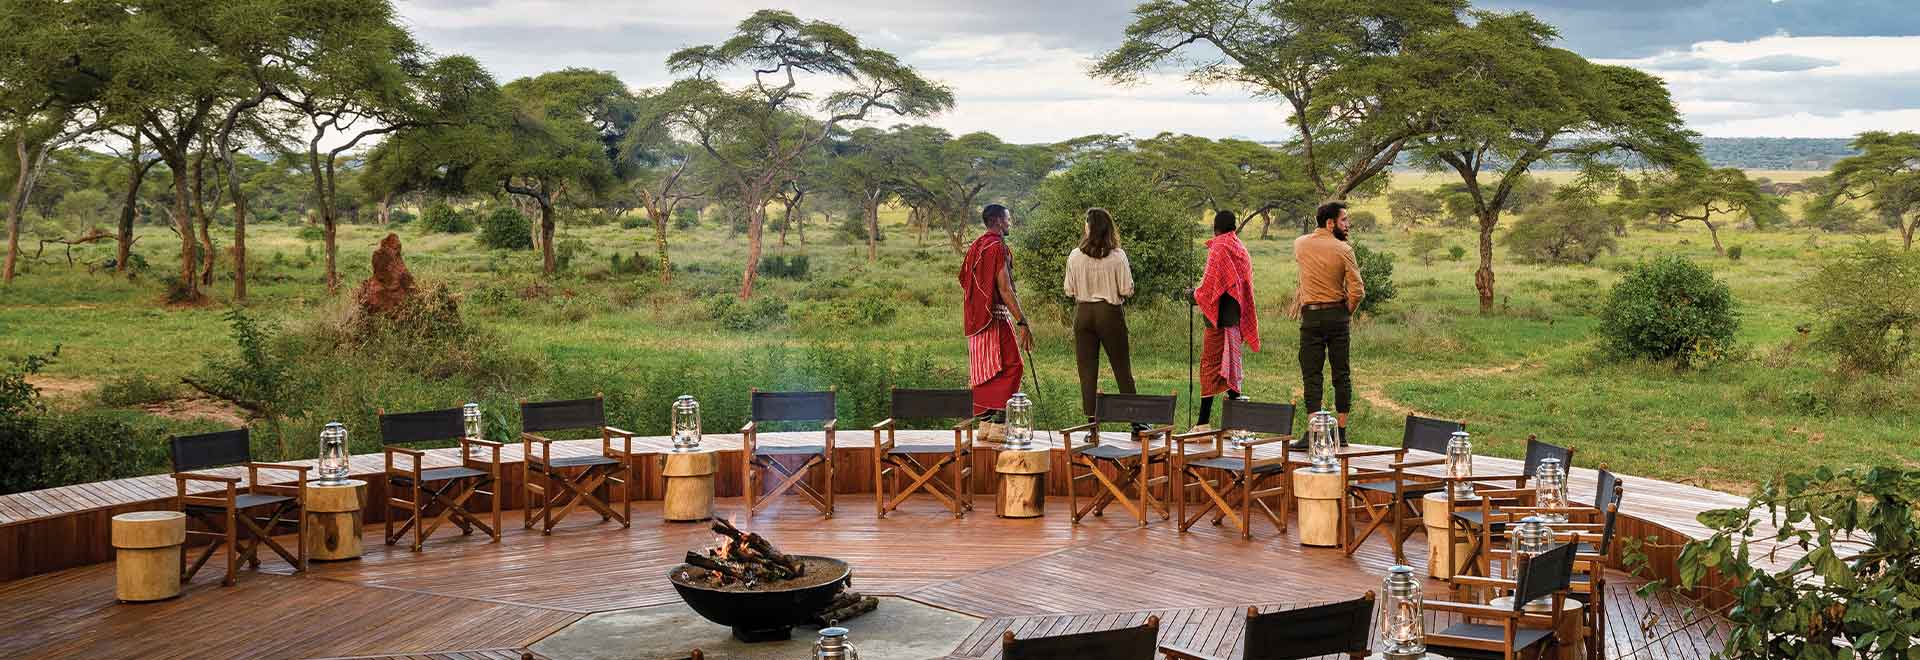 Africa Tanzania Tarangire Sanctuary Swala Maasai Guests m